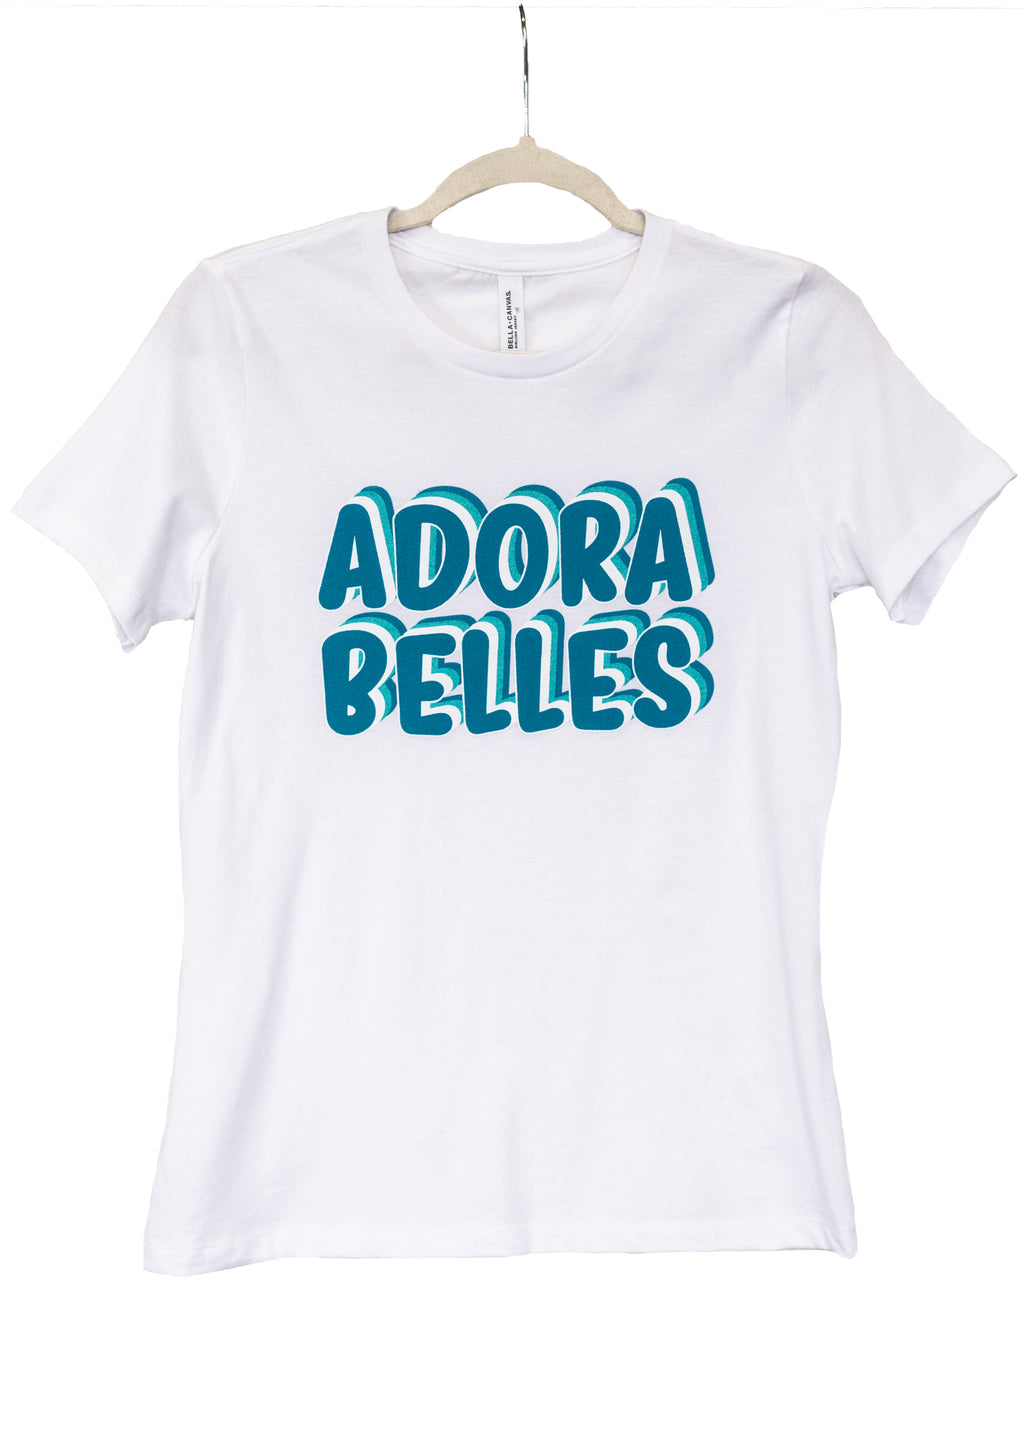 Adorabelles Logo Tee - White/Teal